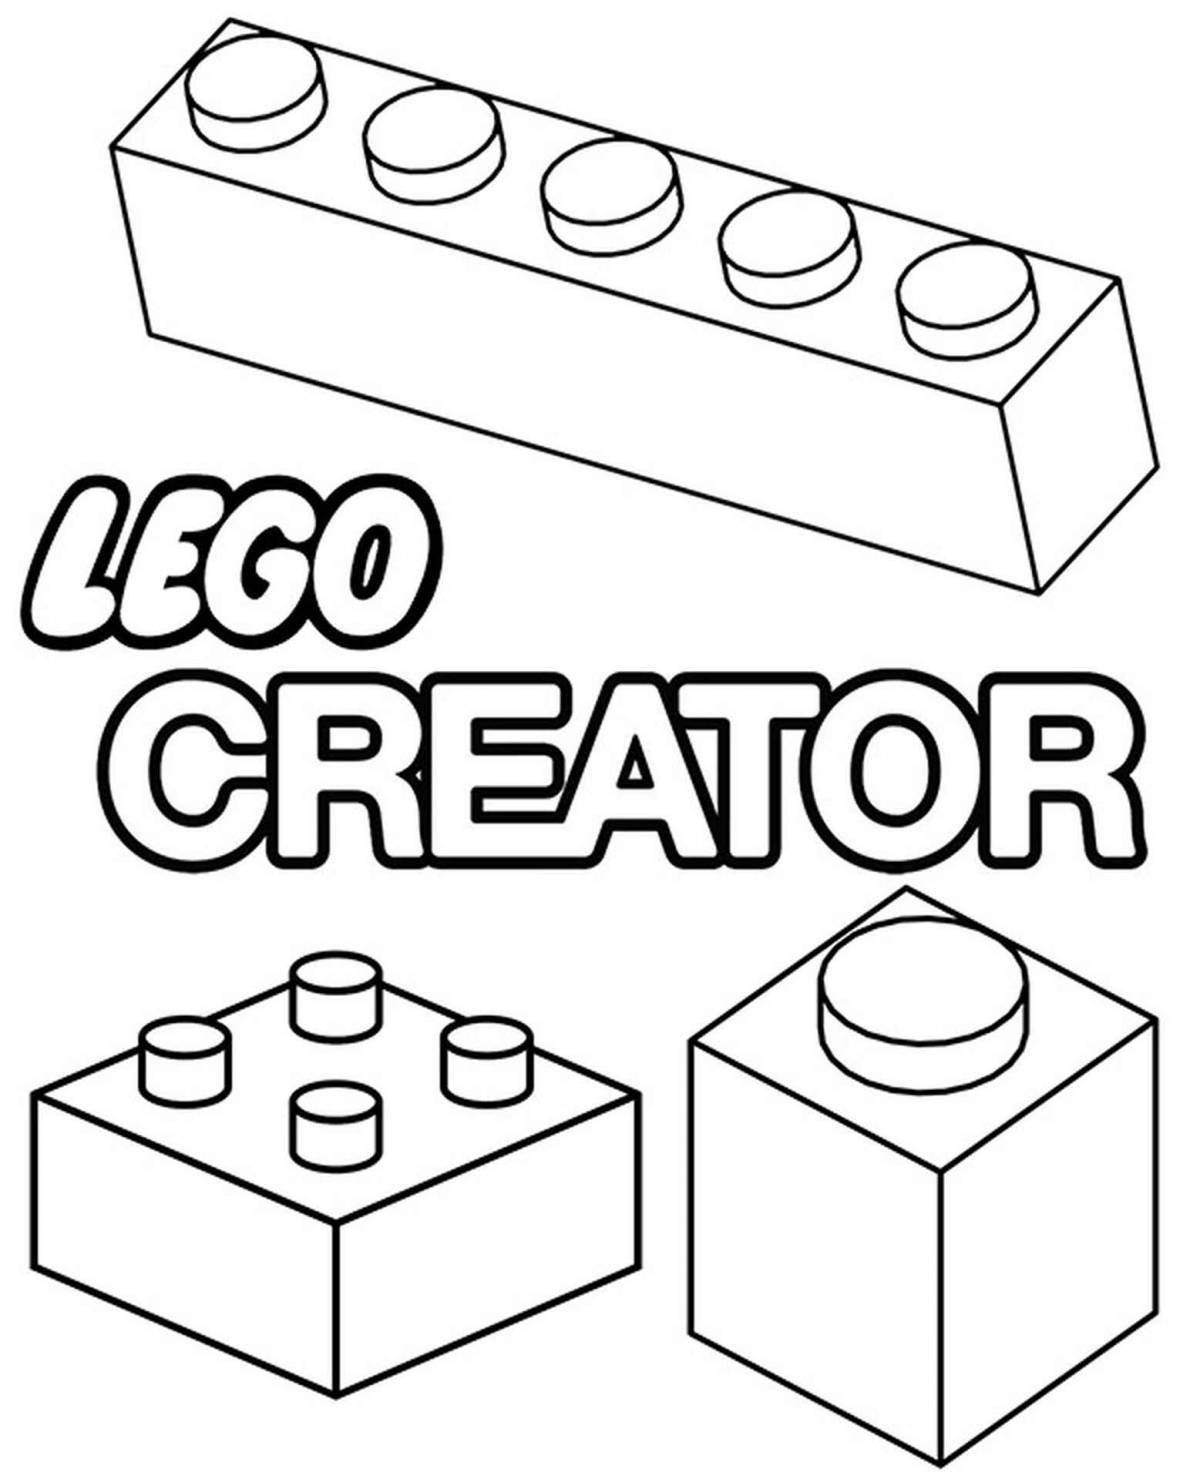 Creative lego logo coloring page